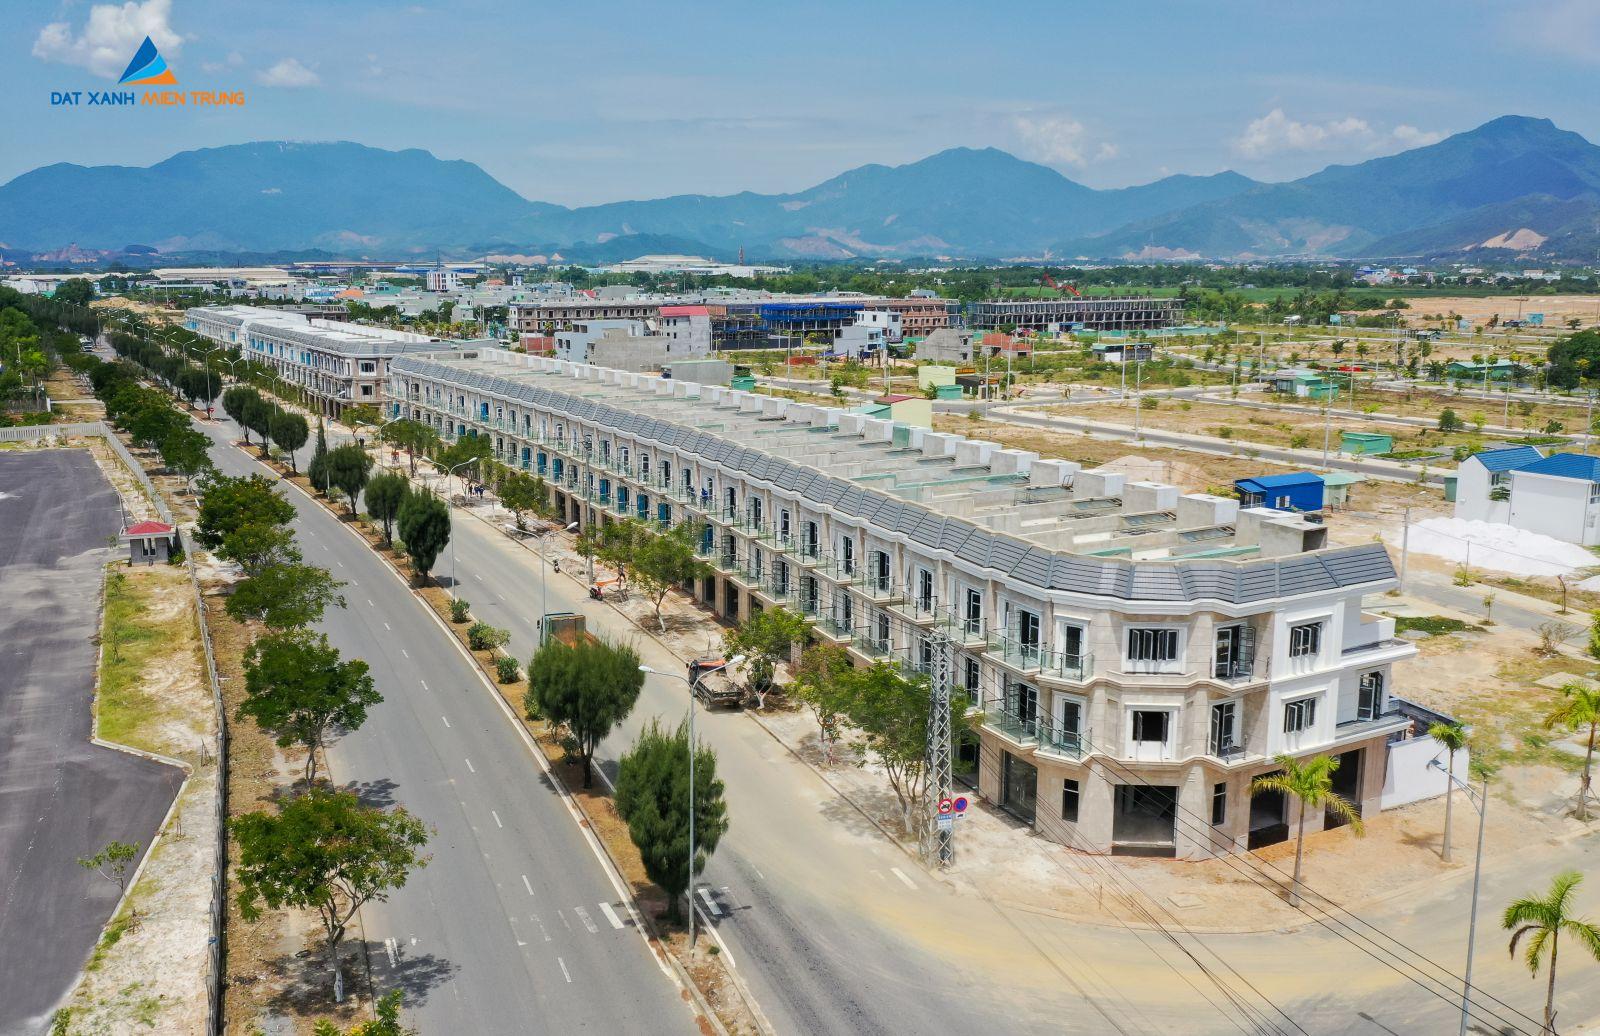 [GÓC CẬP NHẬT] DỰ ÁN SHOPHOUSE LAKESIDE PALACE VÀ LAKESIDE INFINITY THÁNG 07/2019 - Viet Nam Smart City